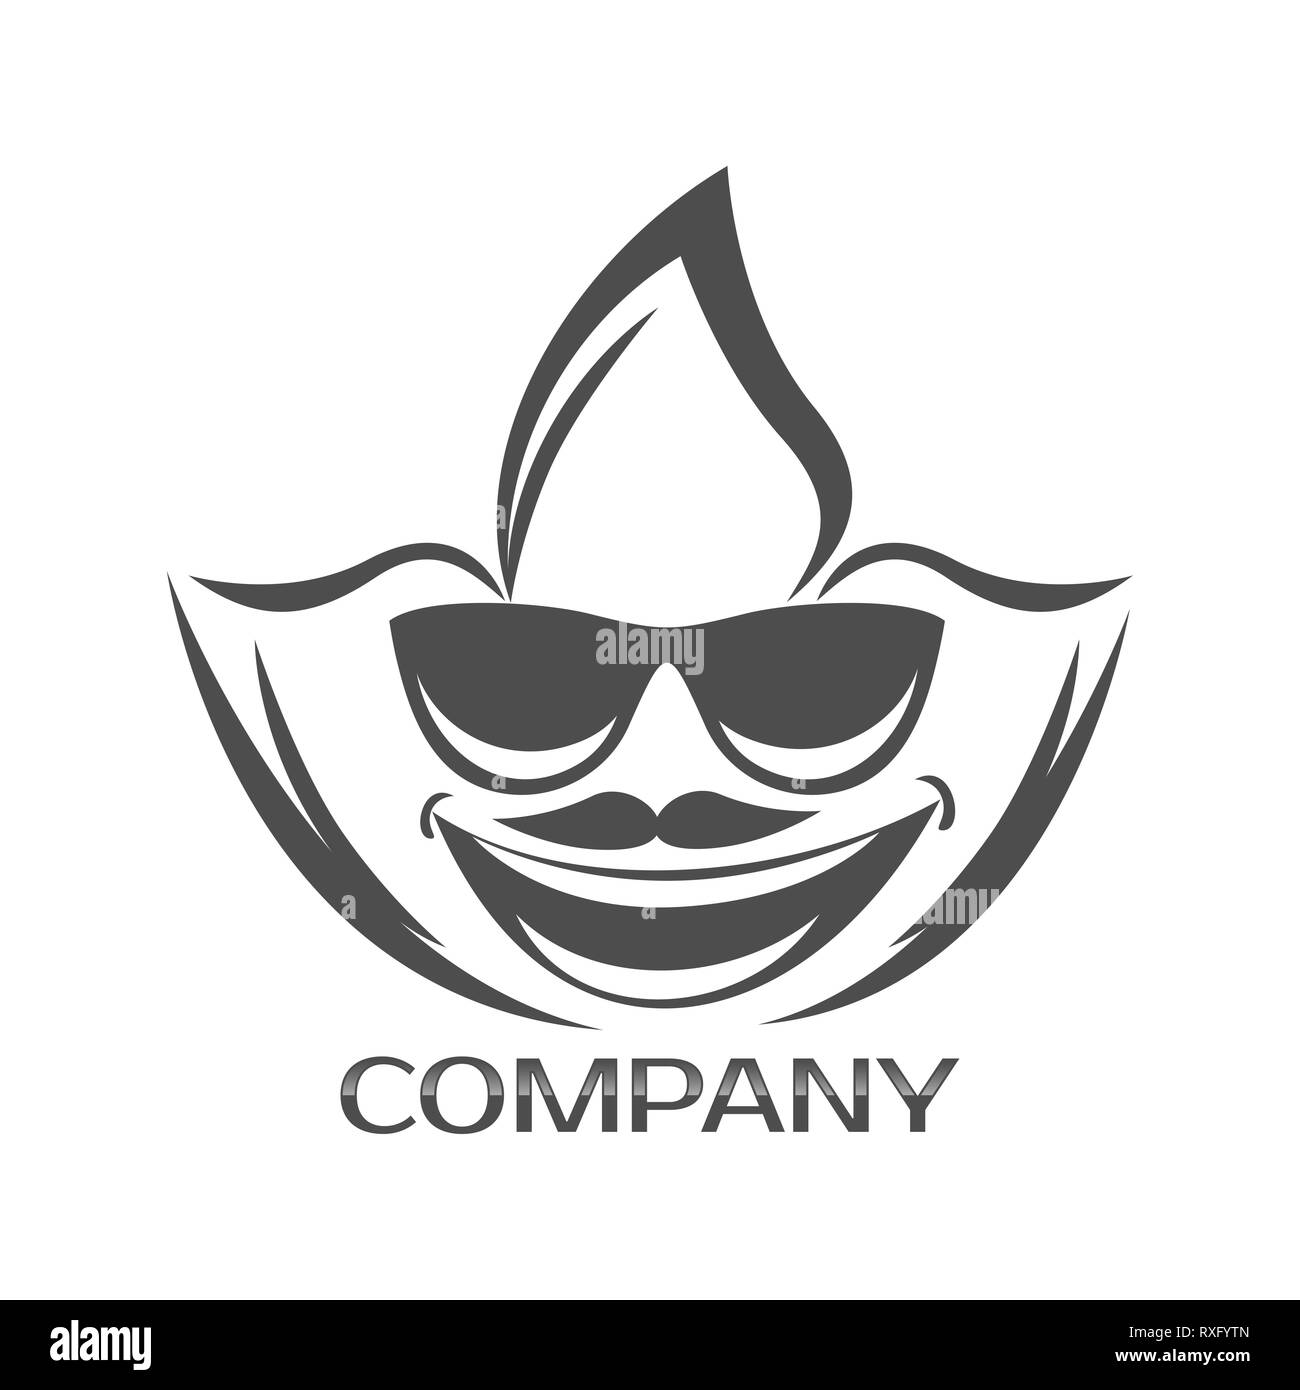 Cannabis leaf and man's face logo Stock Photo